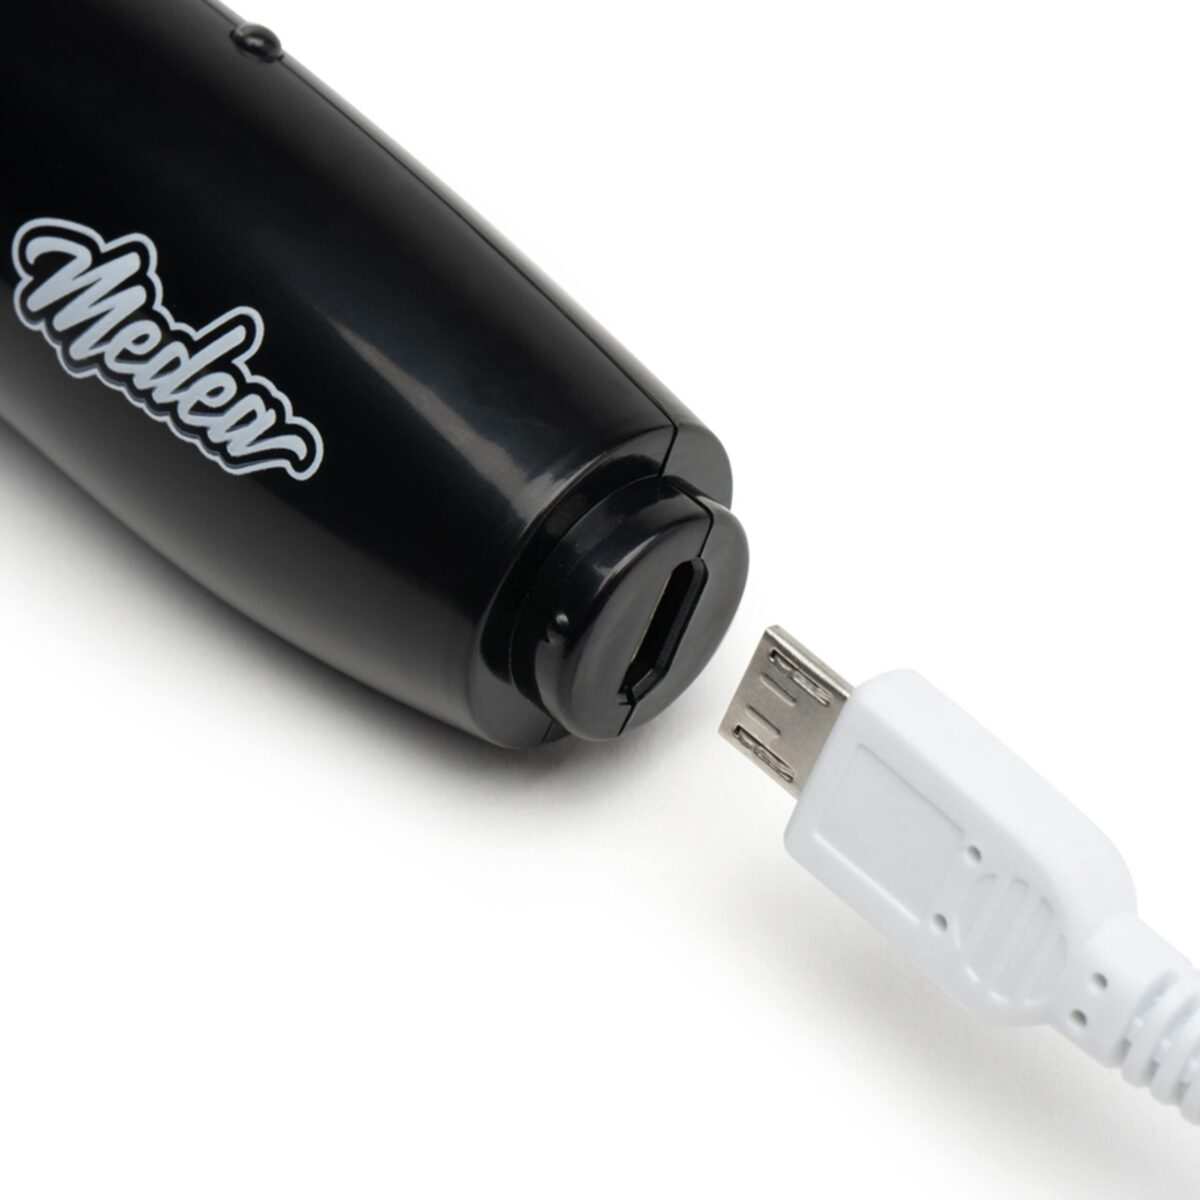 Medea USB Rechargeable Electric Eraser - Επαναφορτιζόμενη Ηλεκτρική Γόμα USB